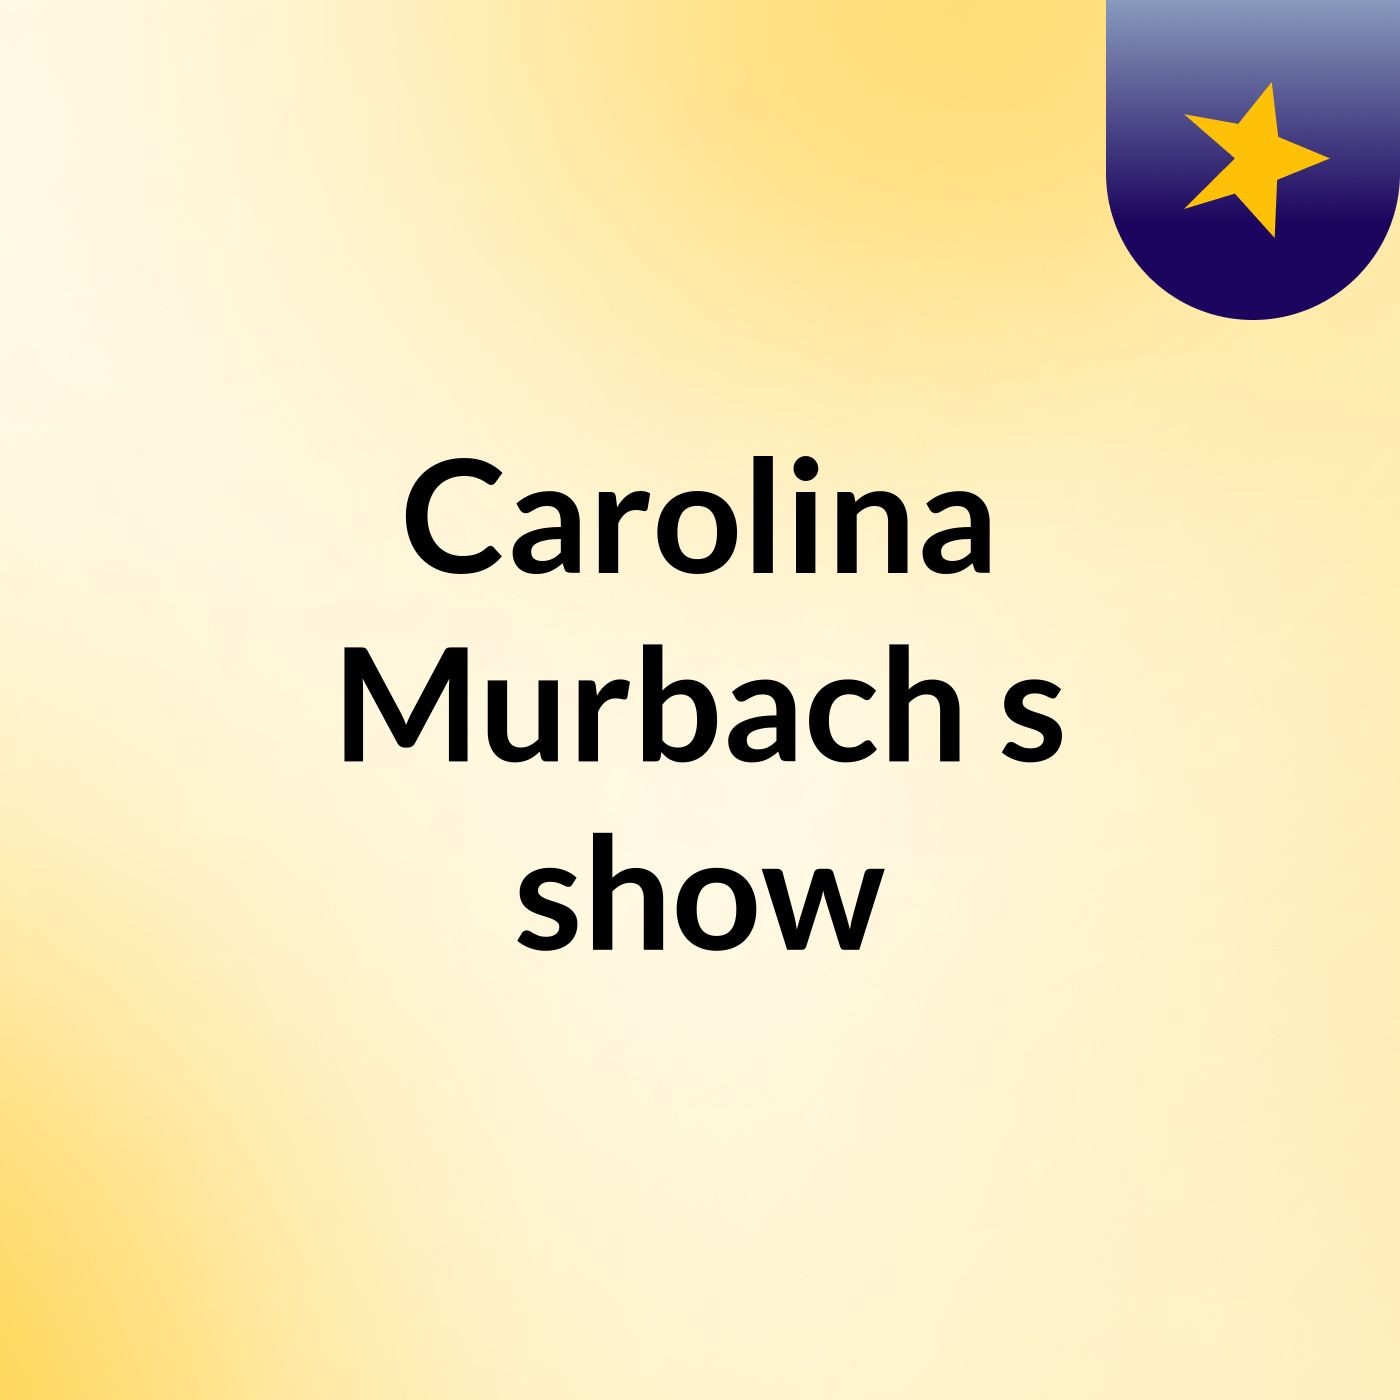 Carolina Murbach's show